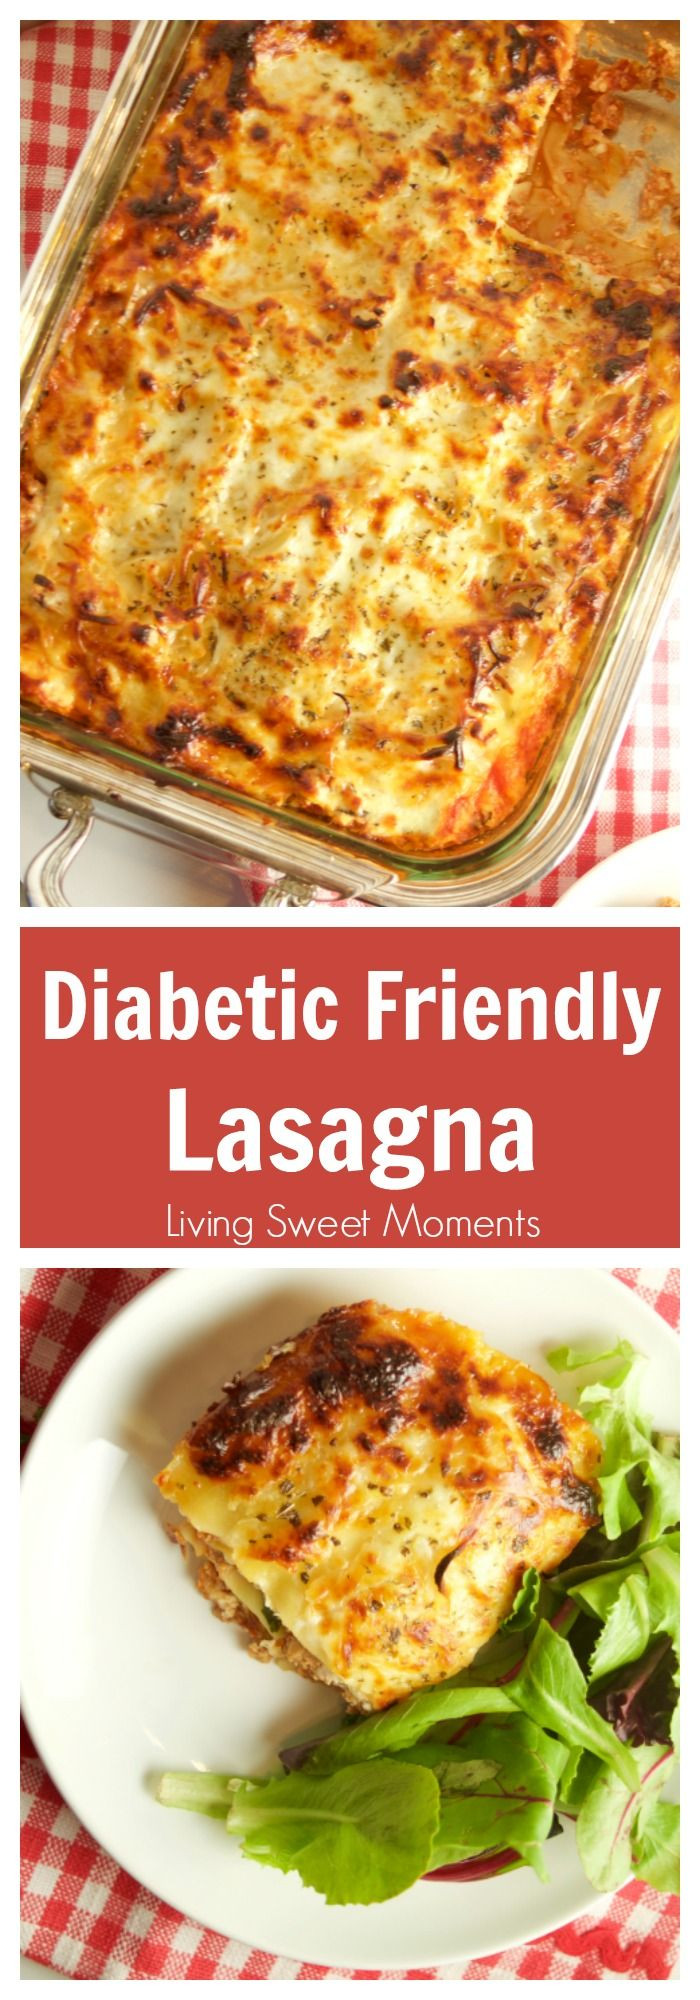 Healthy Diabetic Dinners
 100 Diabetic Dinner Recipes on Pinterest